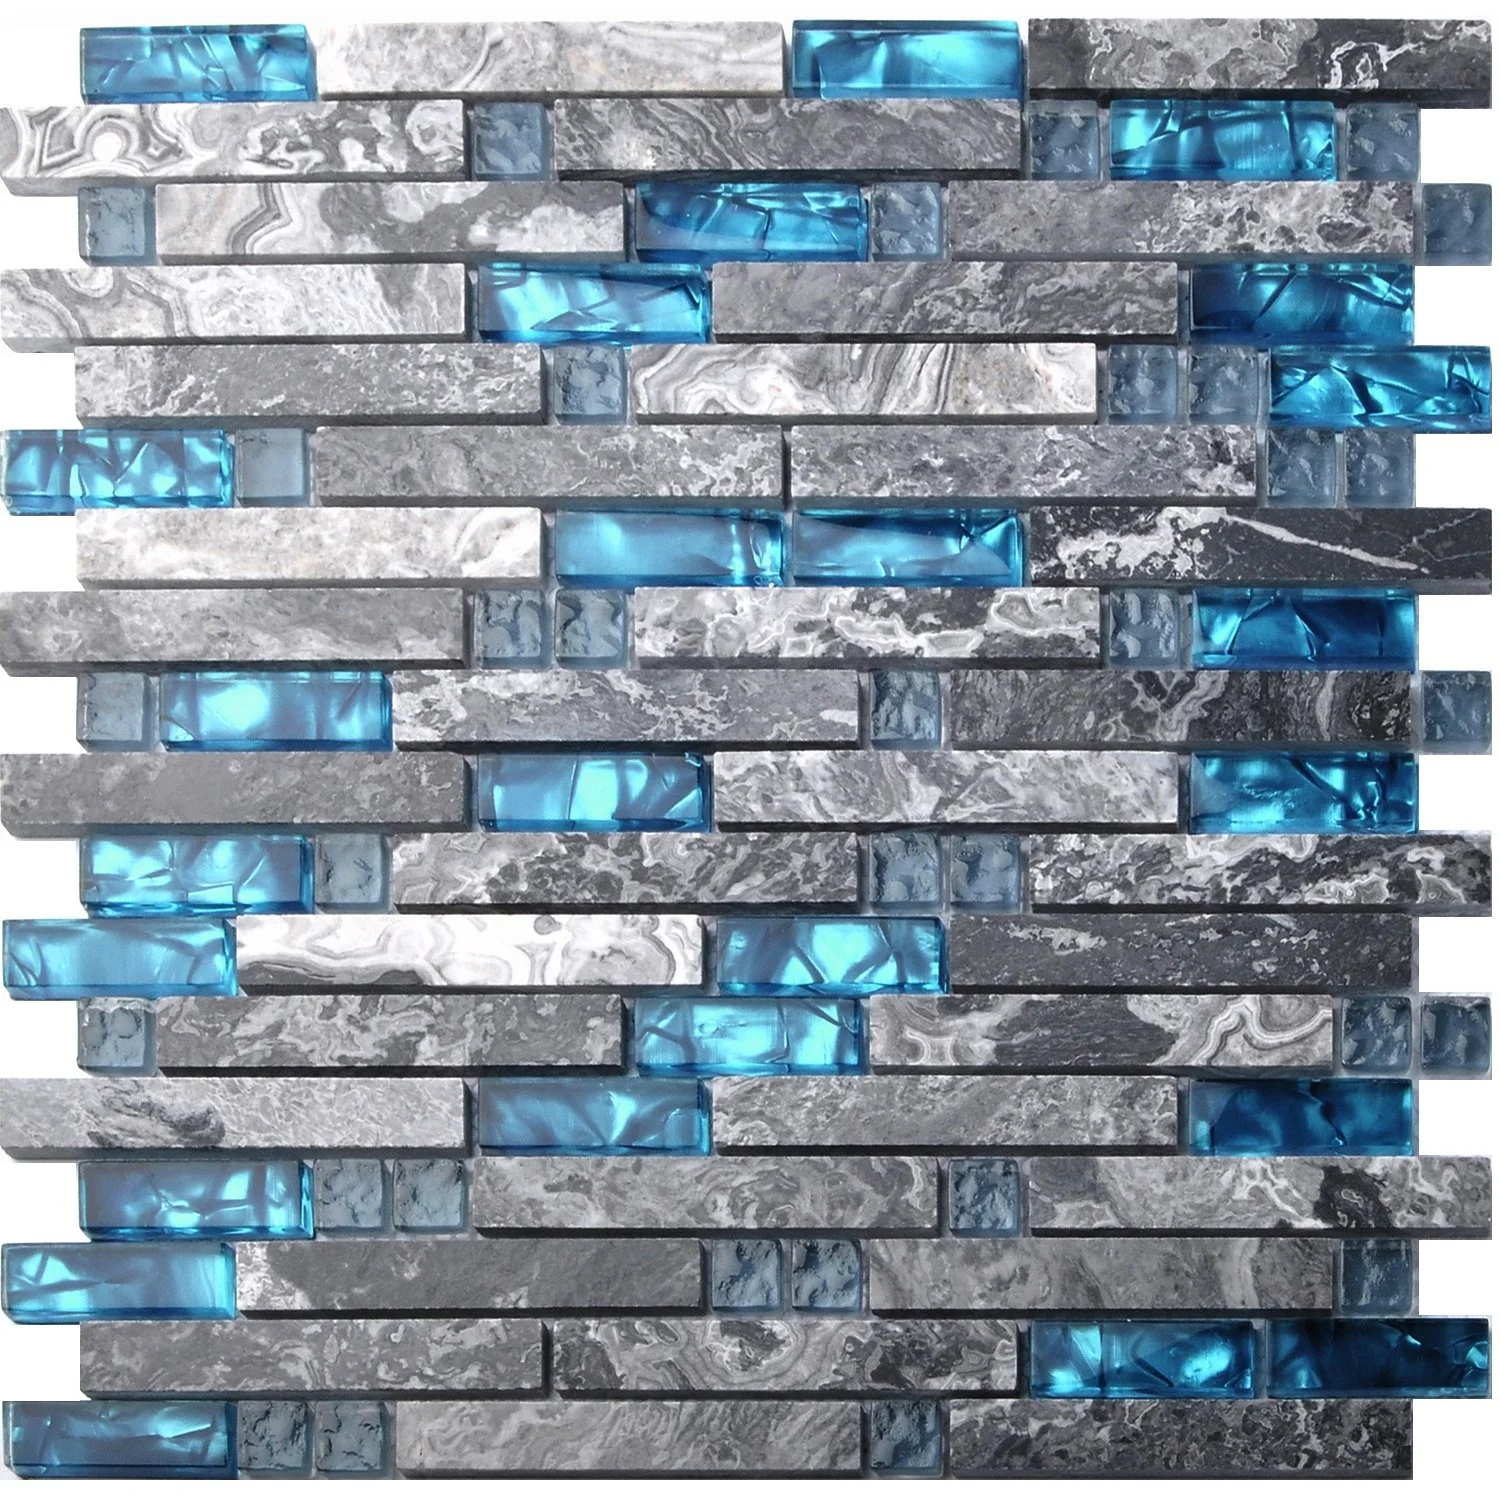 Home Building Glass Tile Kitchen Backsplash Idea Bath Shower Wall Decor Teal Blue Gray Wave Marble Interlocking Pattern  Mosaic